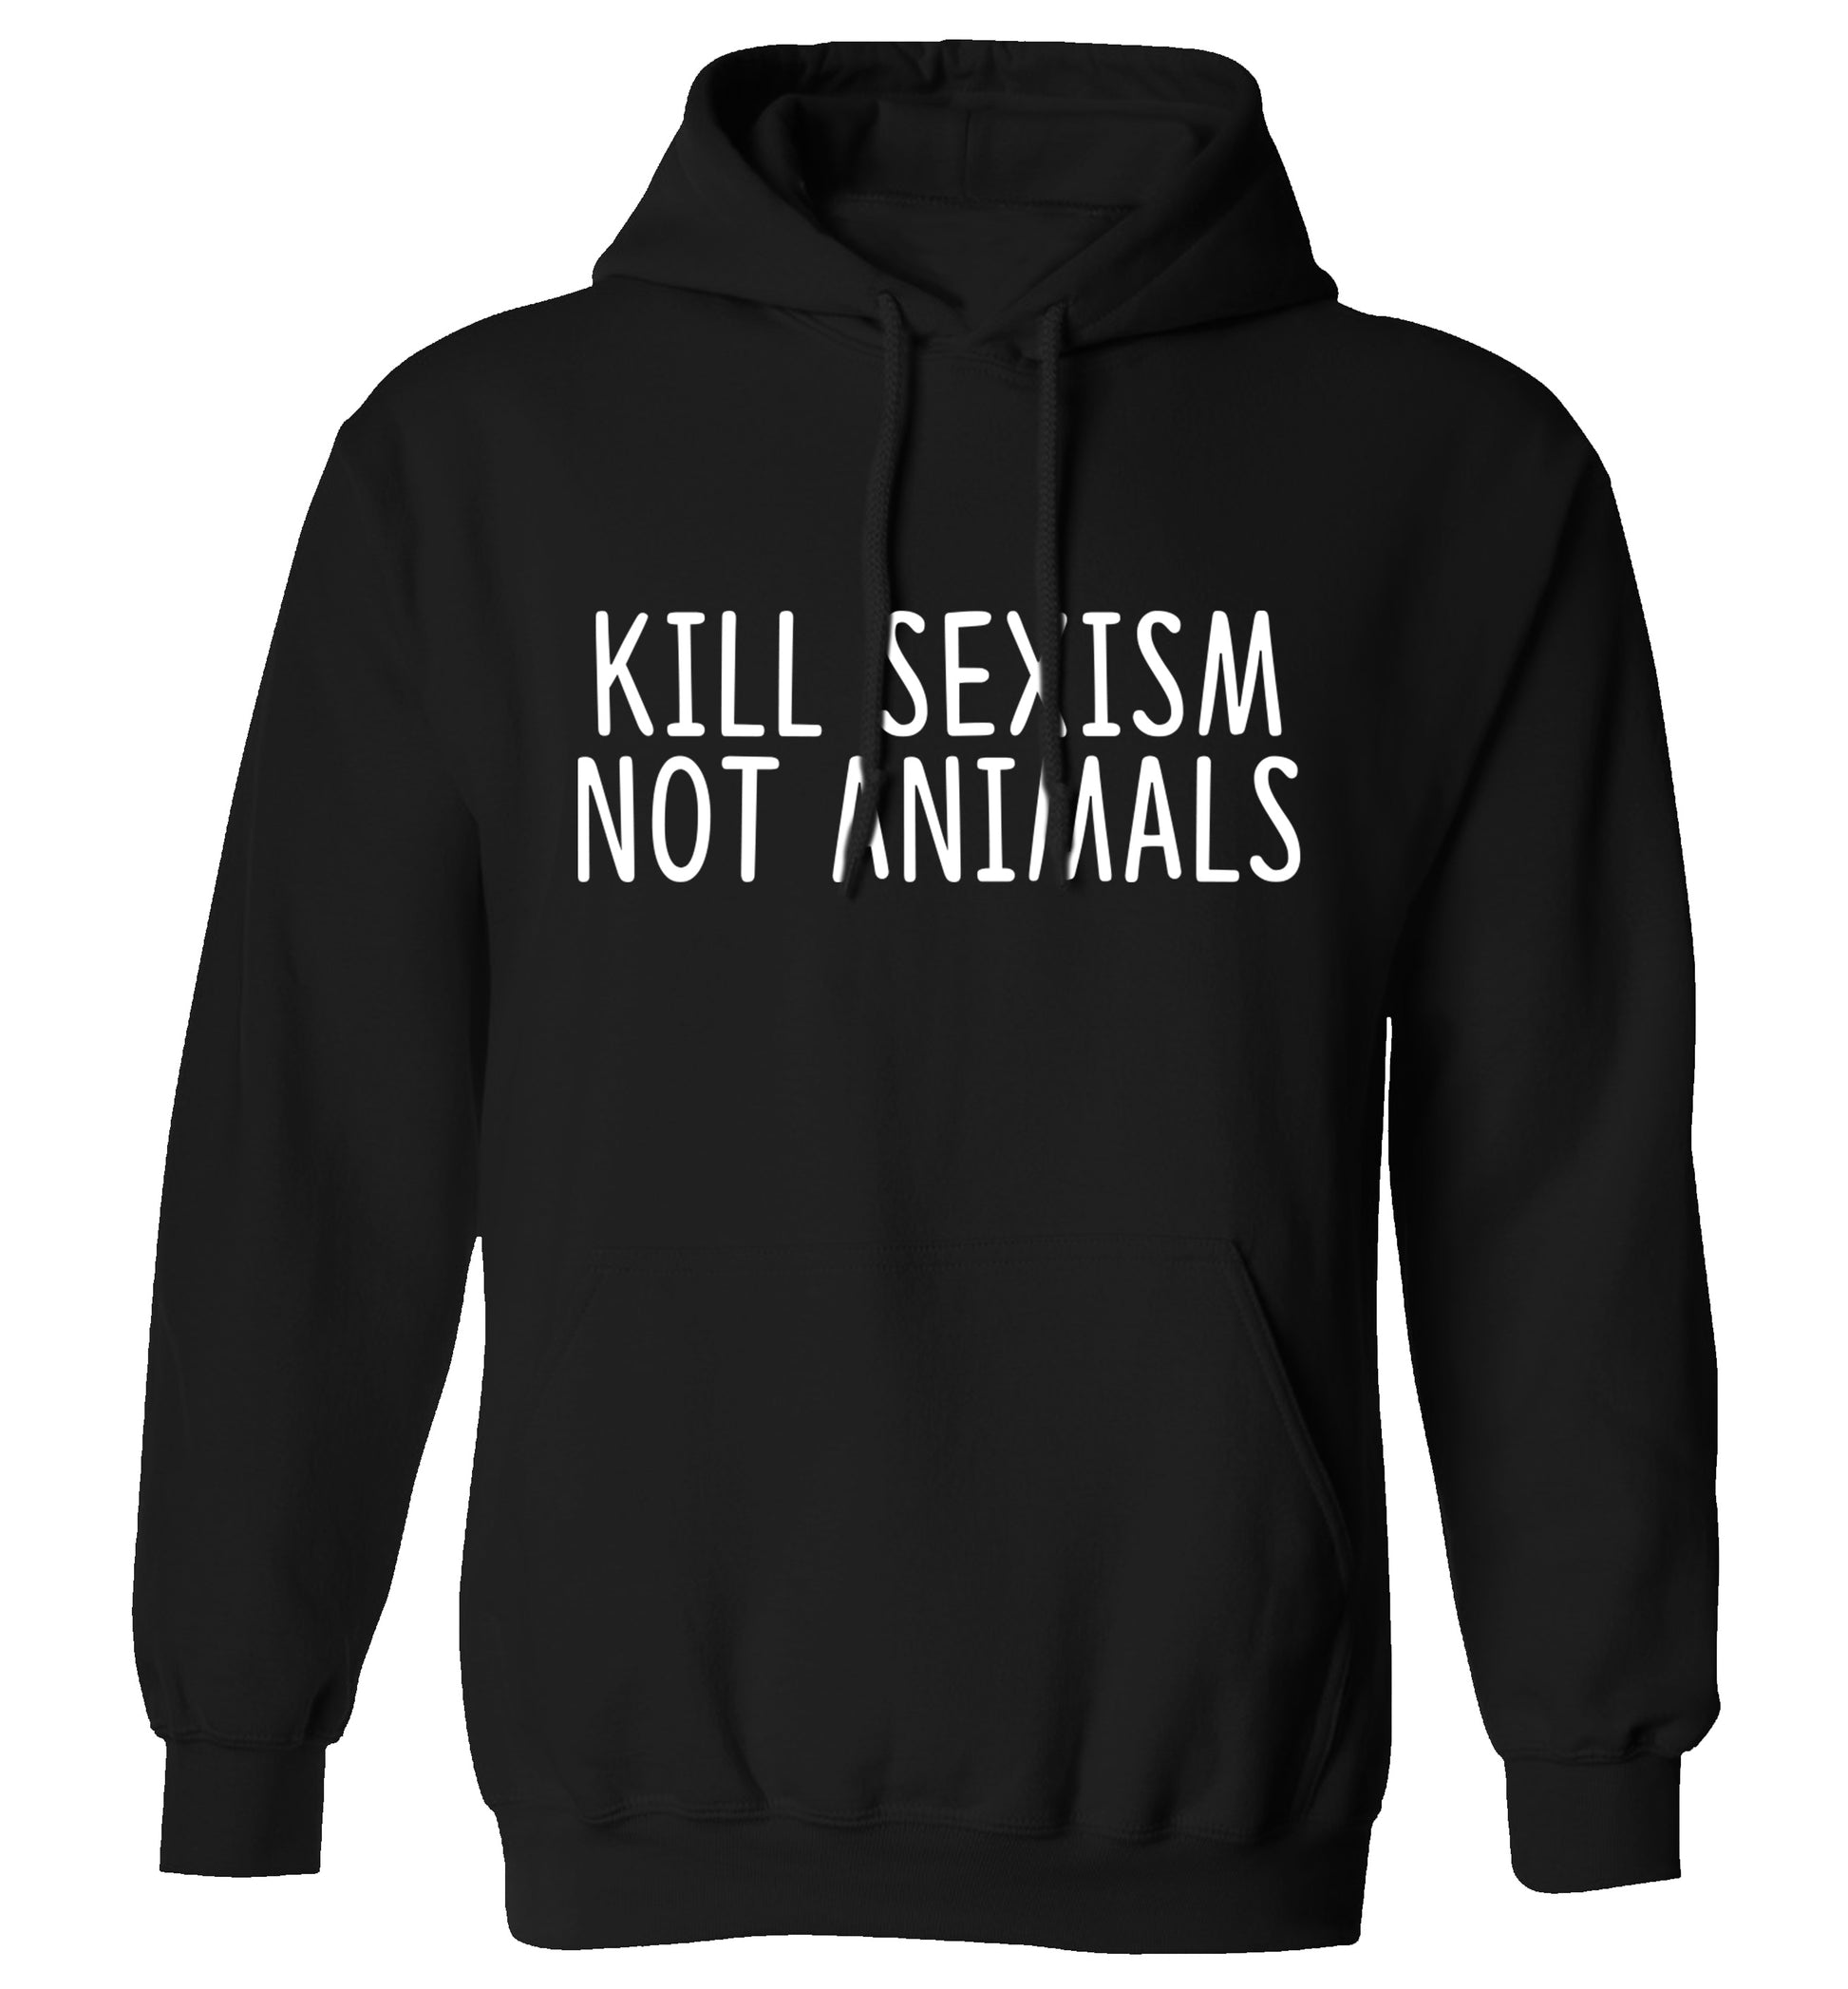 Kill Sexism Not Animals adults unisex black hoodie 2XL